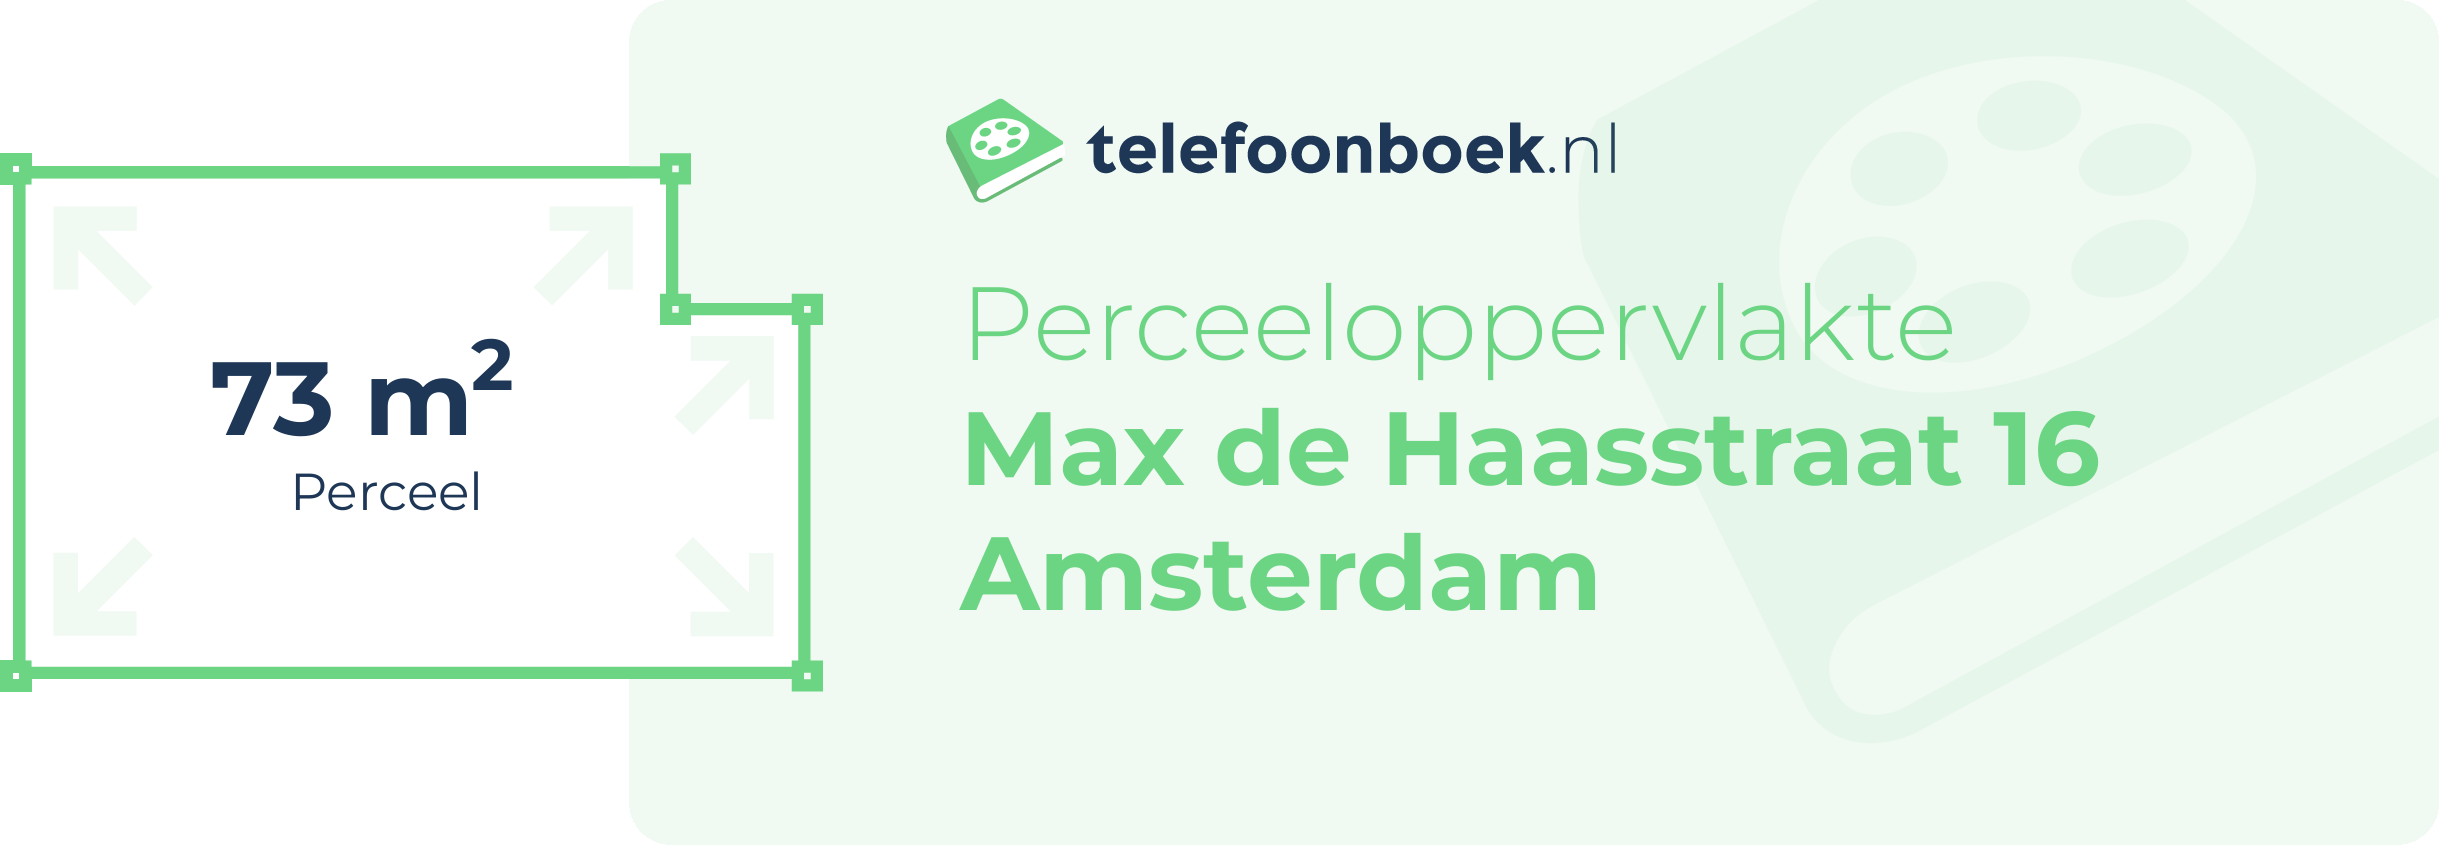 Perceeloppervlakte Max De Haasstraat 16 Amsterdam